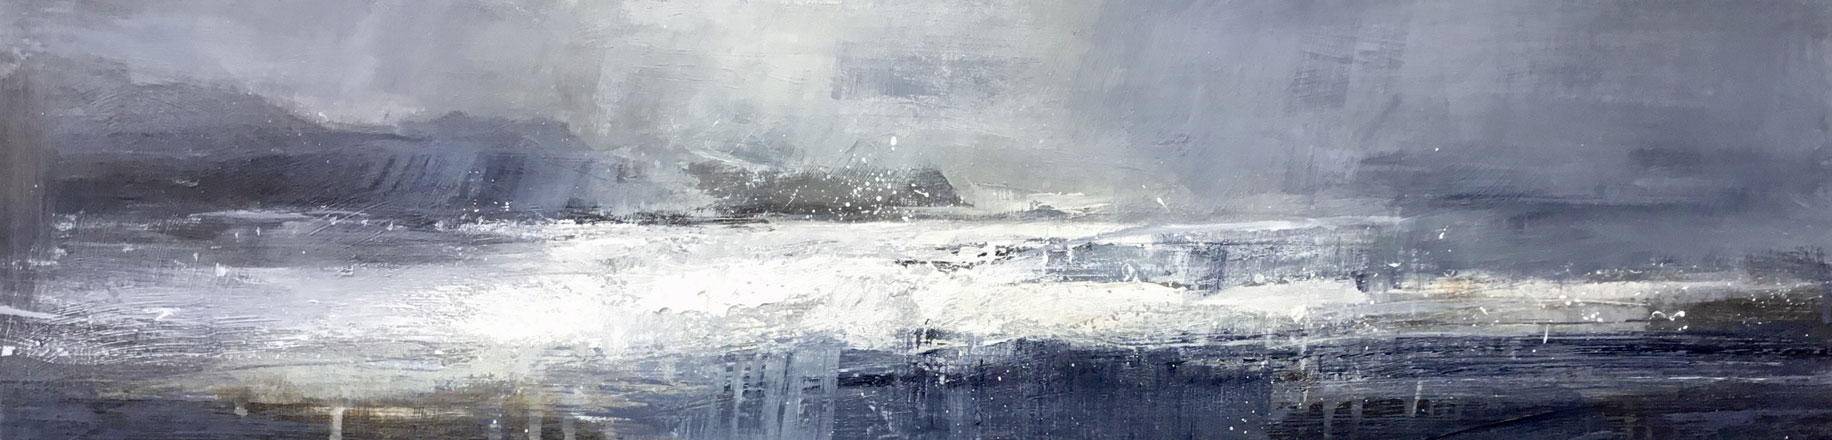 Mist and High Tide, Gower - Richard Barrett